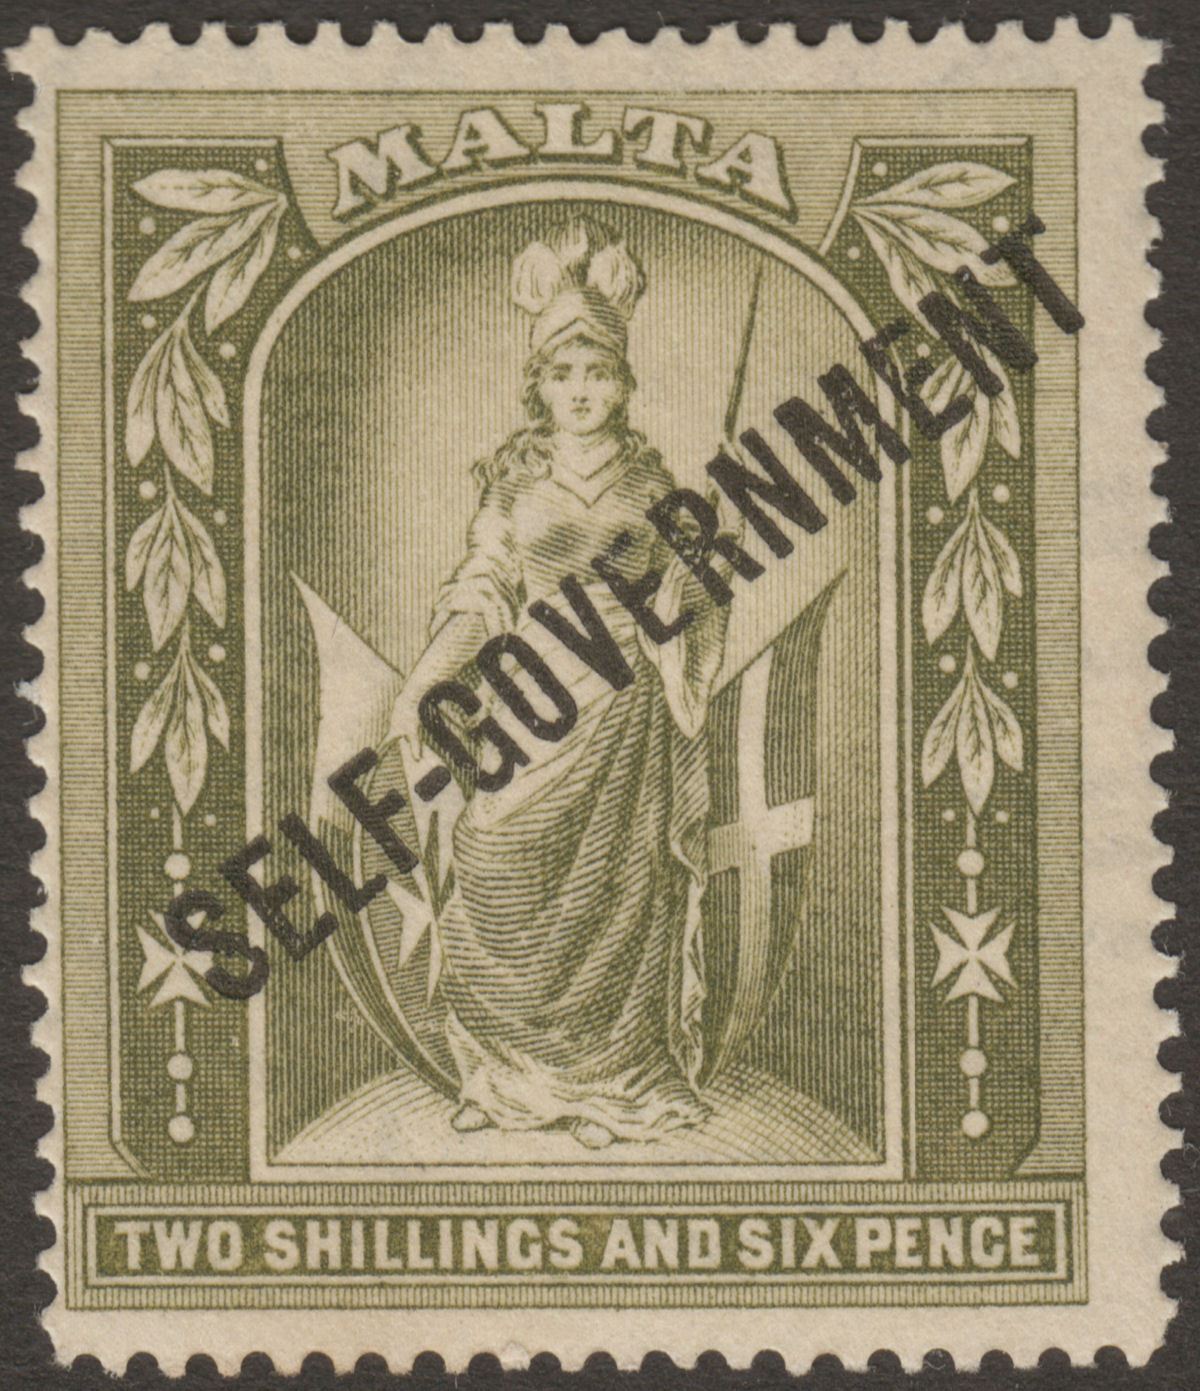 Malta 1922 KGV Self Government 2sh6d Olive-Grey Mint SG112 cat £32